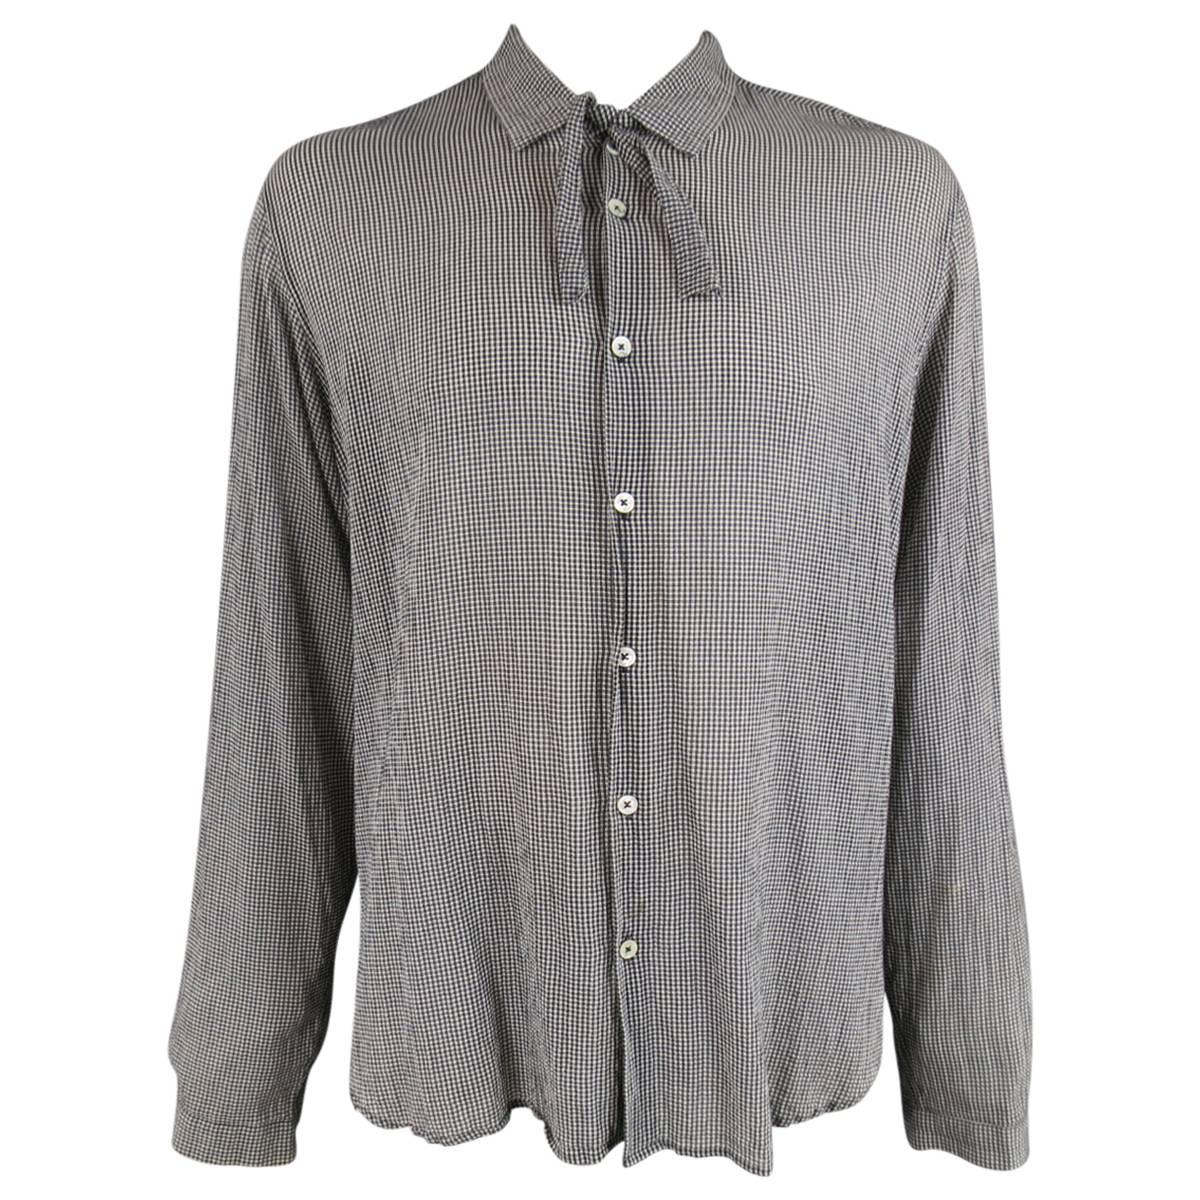 ANN DEMEULEMEESTER M Black & White Plaid Cotton / Silk Long Sleeve Tie Shirt